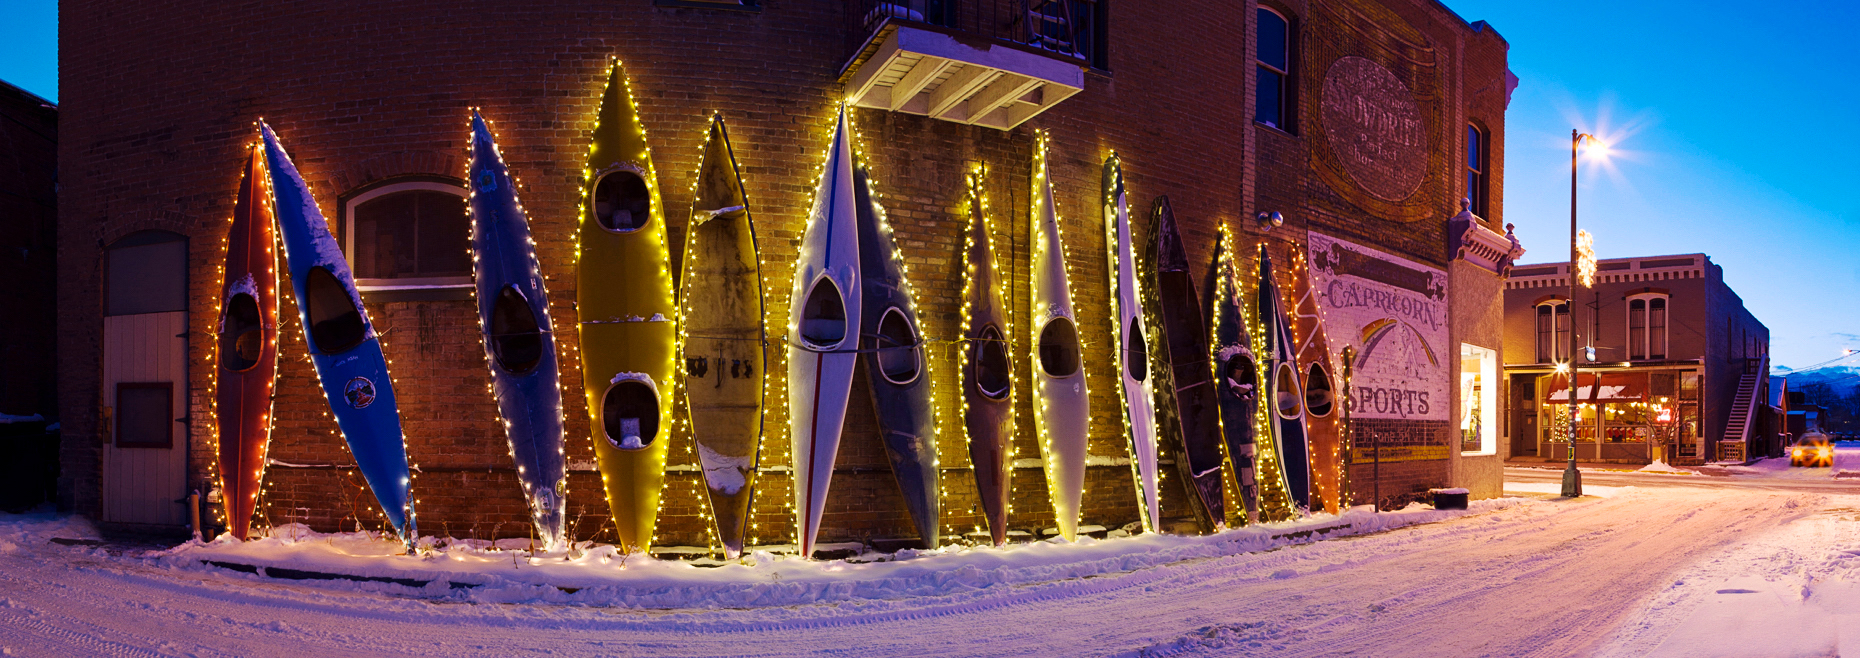 Dusk view of holiday lights illuminate colorful kayaks along a historic building in downtown Salida, Colorado, USA.